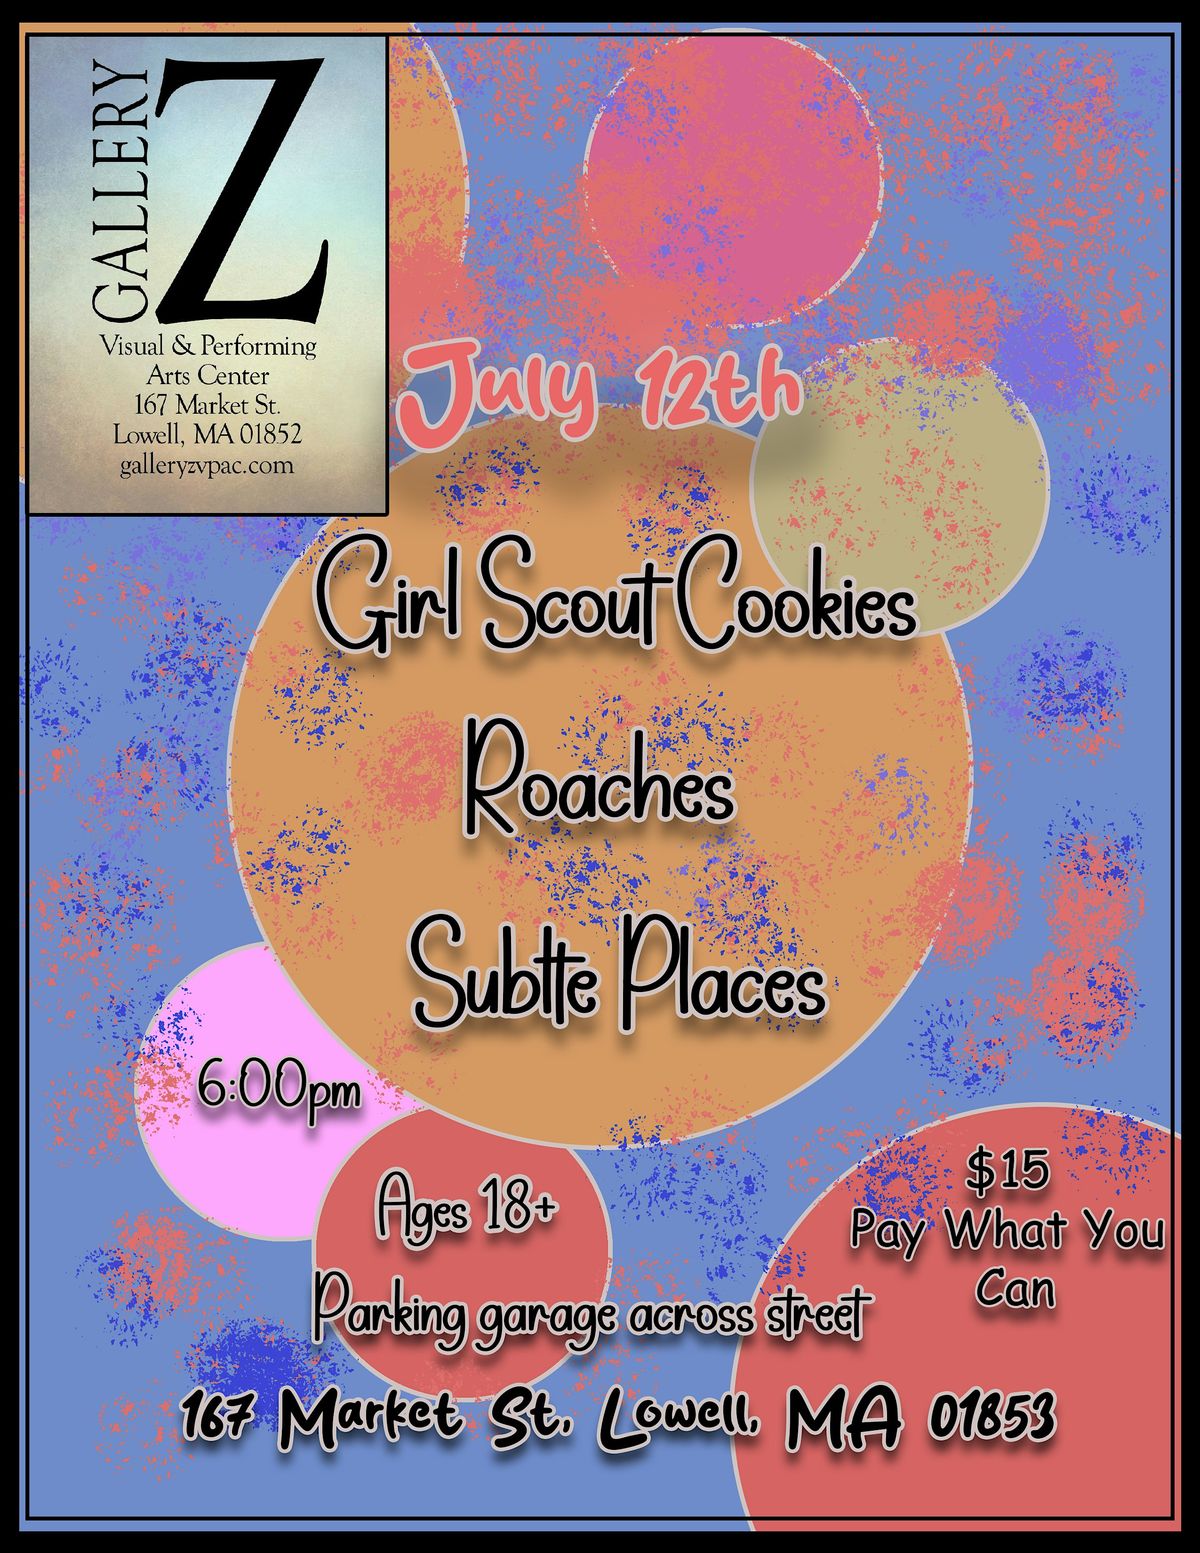 Girl Scout Cookies, Roaches, Subtle Places